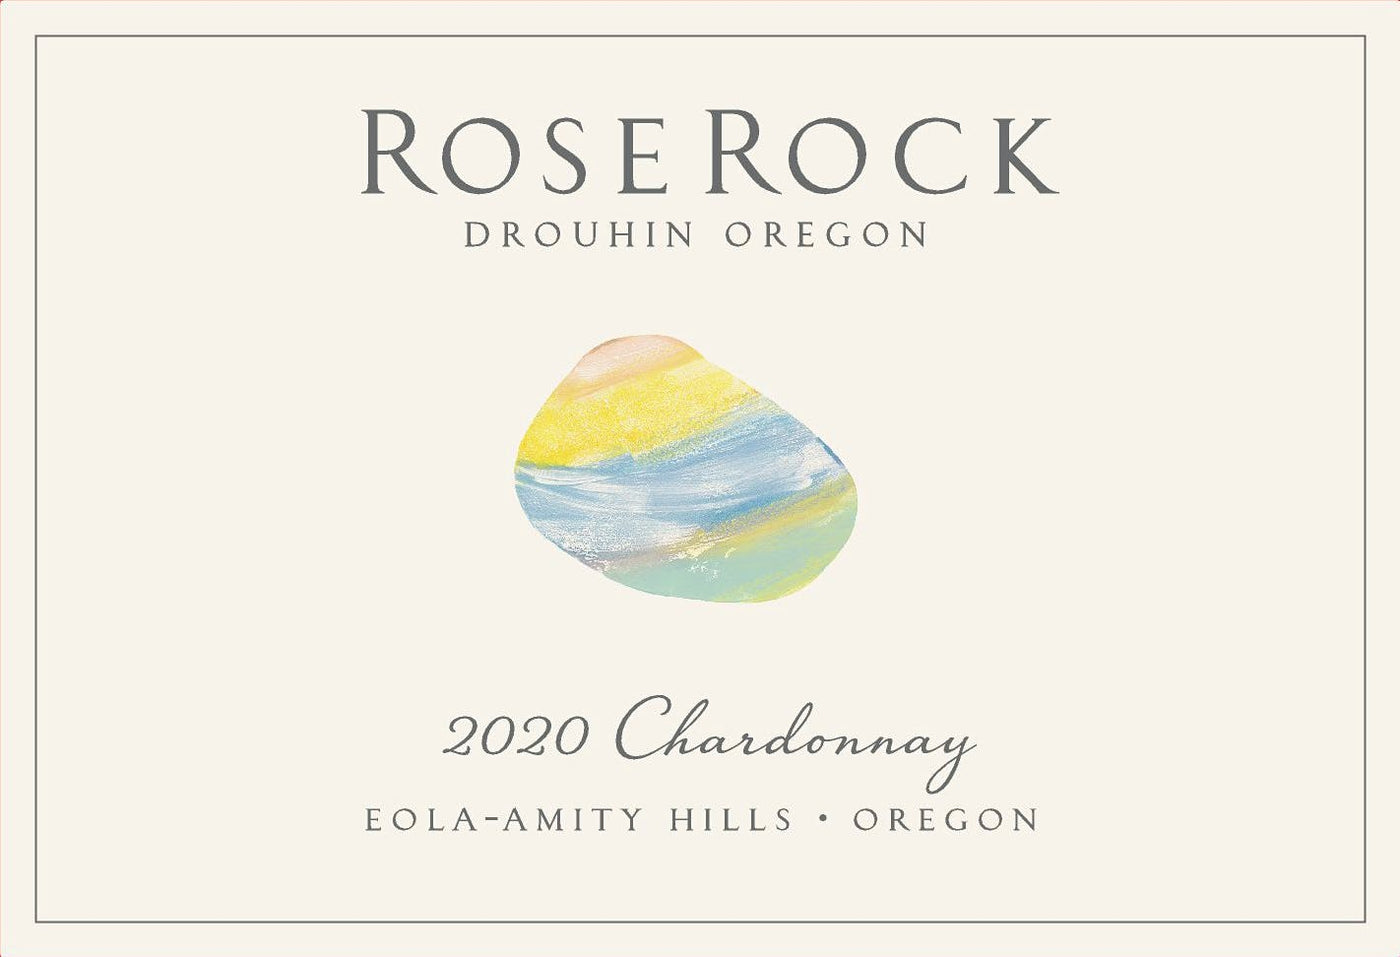 Drouhin Oregon Roserock Chardonnay Eola-Amity Hills 2022